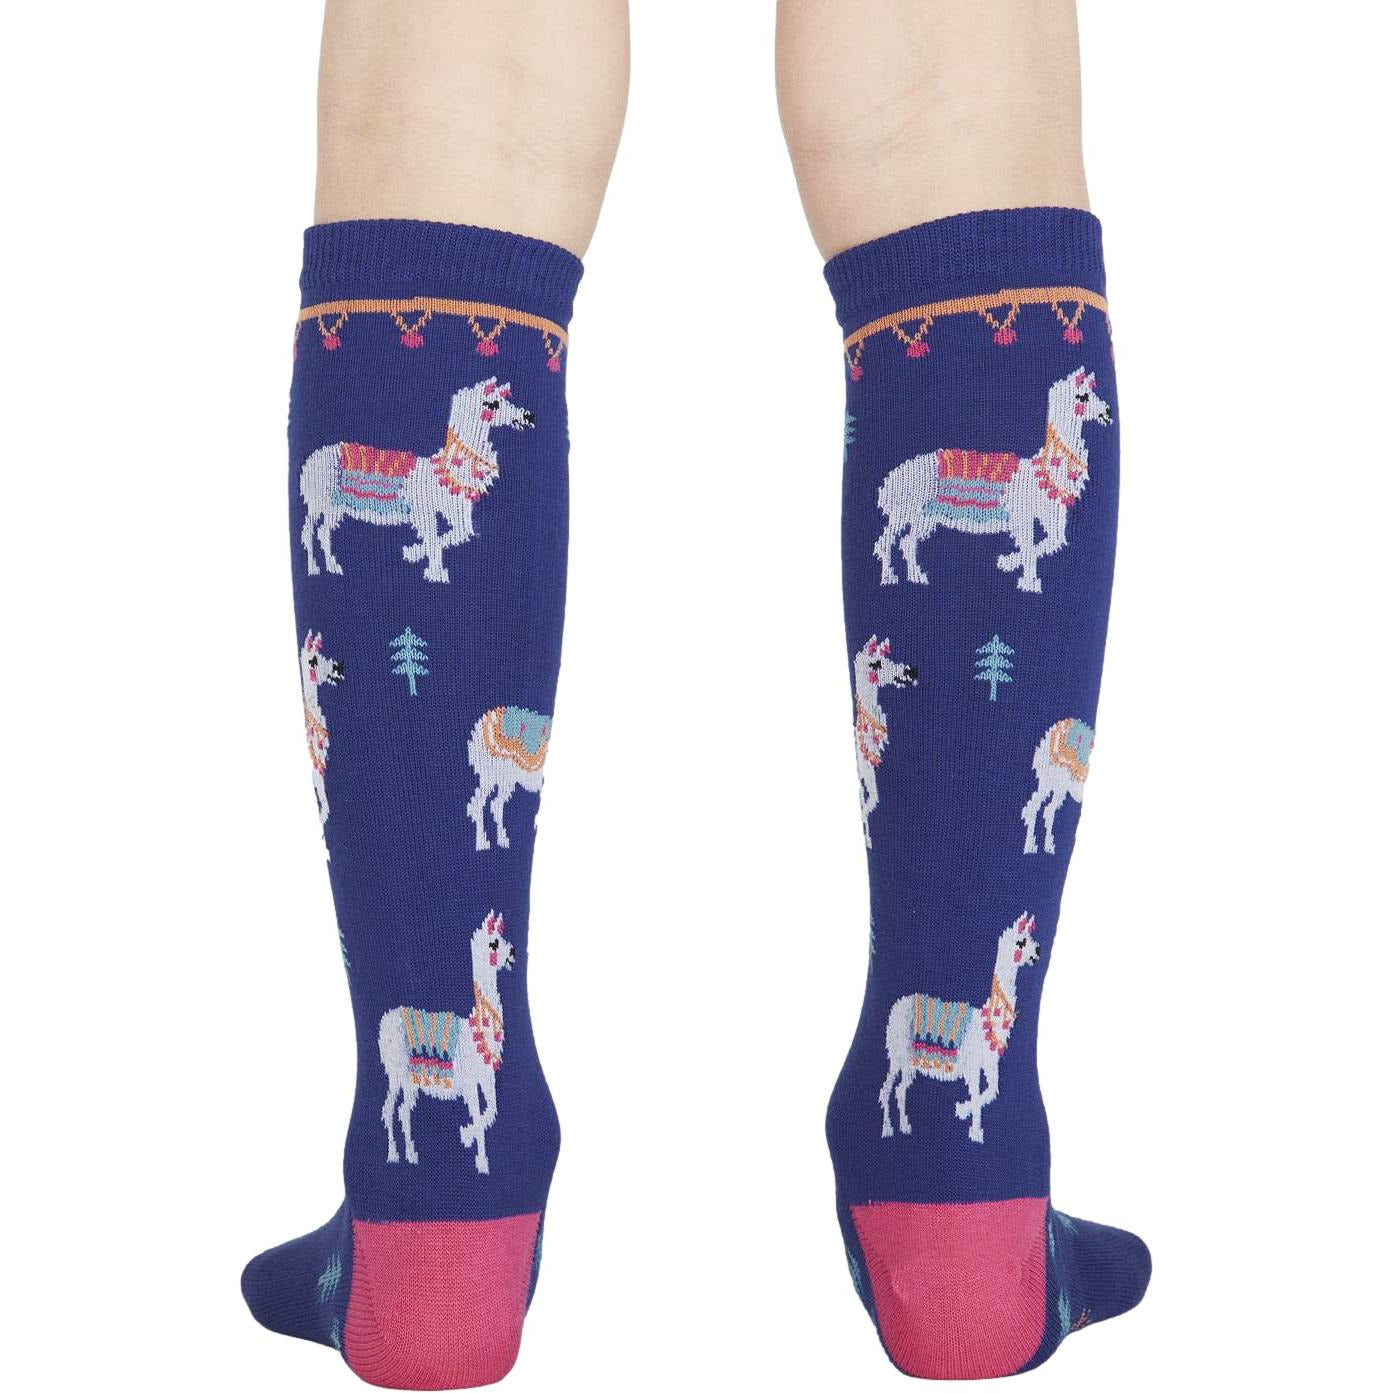 Sock it to me Como Te Llama? Youth (aged 3-6) Knee High Socks